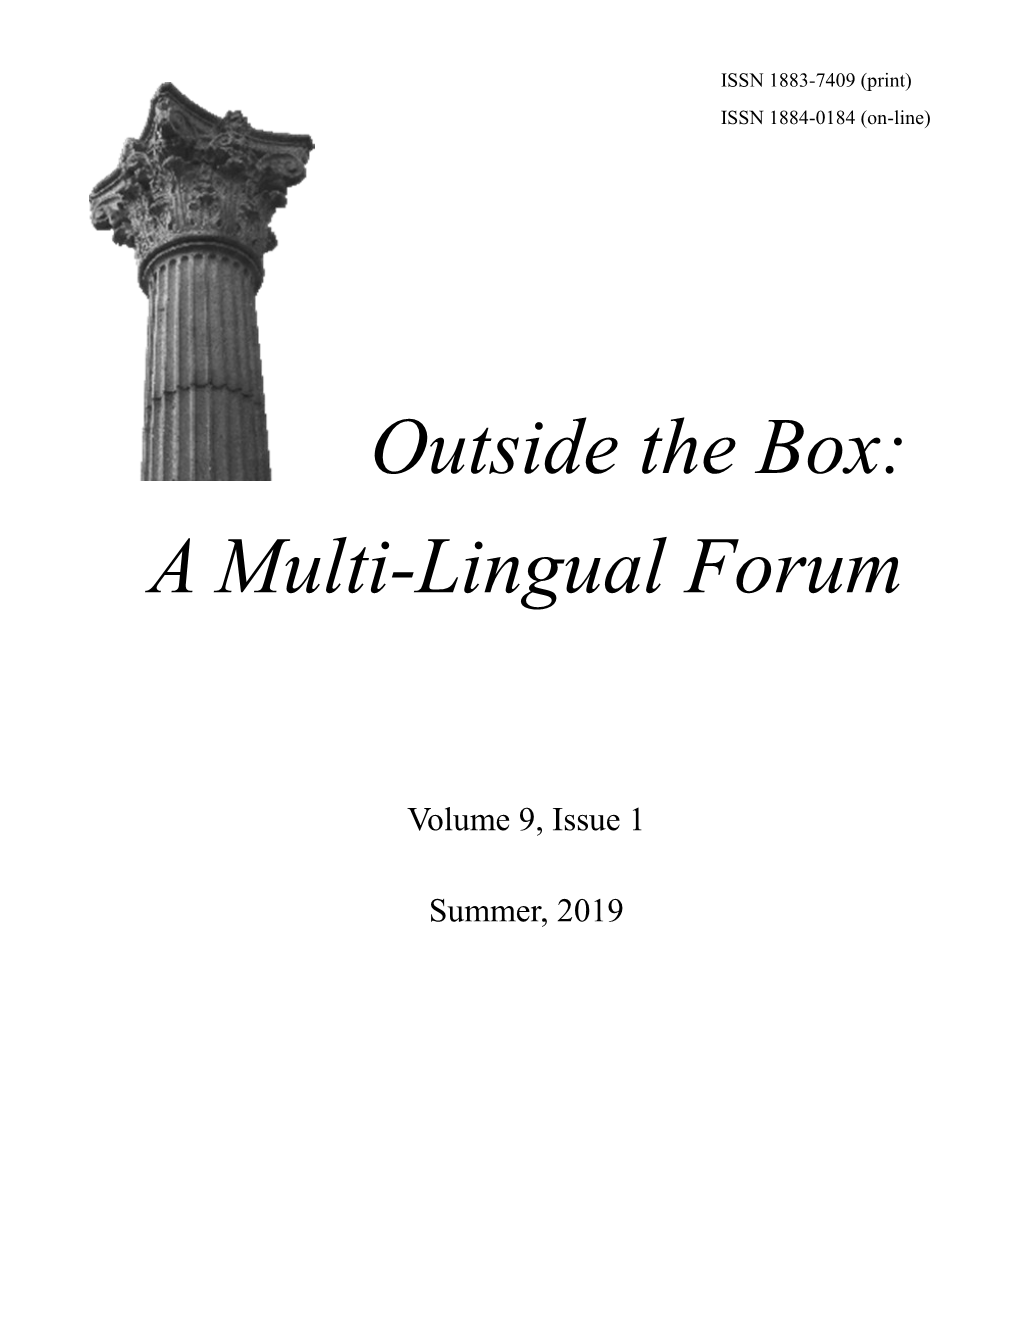 Outside the Box: a Multi-Lingual Forum